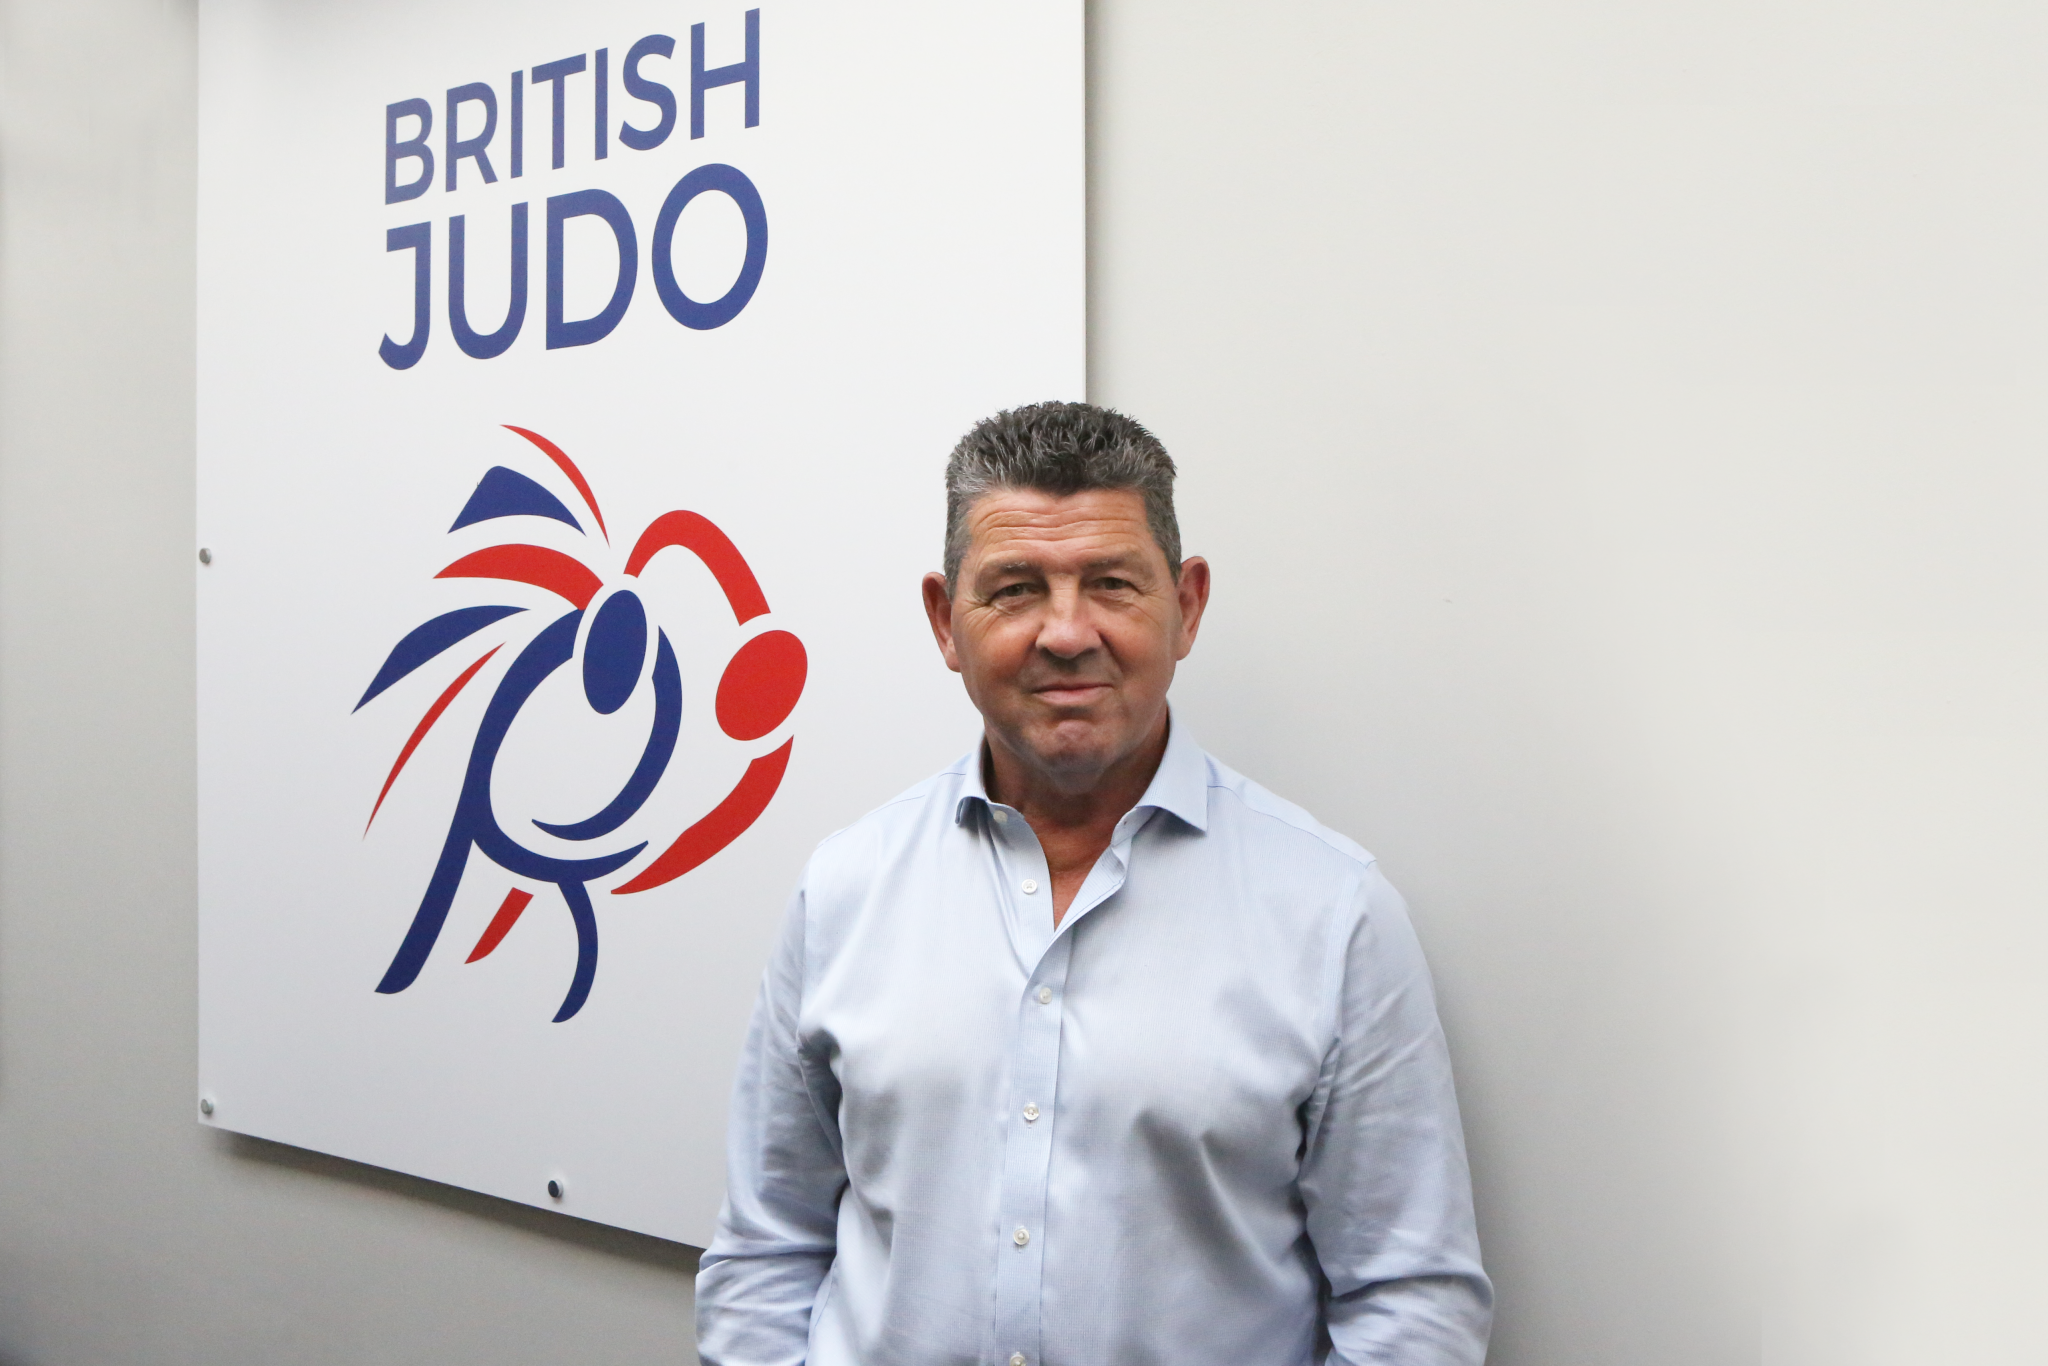 Gualtieri brought onto British Judo Board as chair Saez prepares to resign